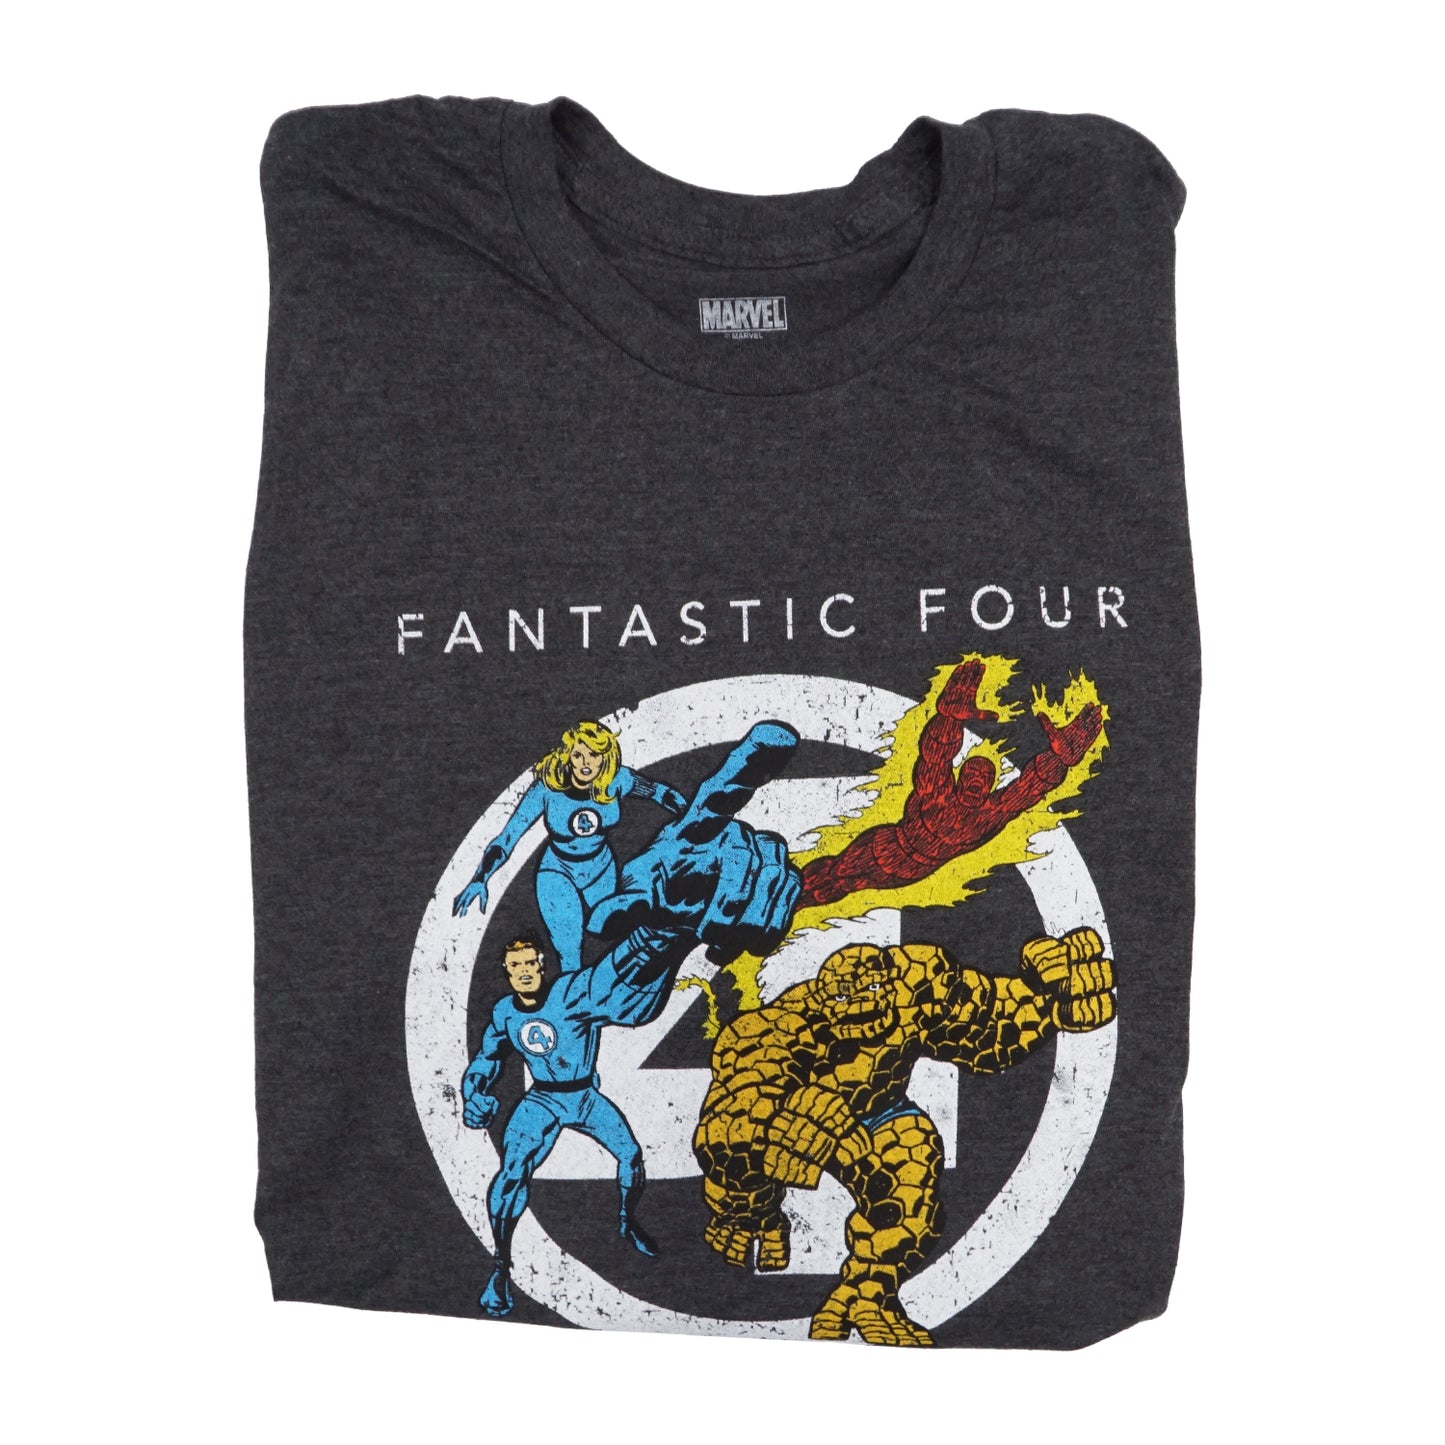 Marvel Fantastic Four T shirt